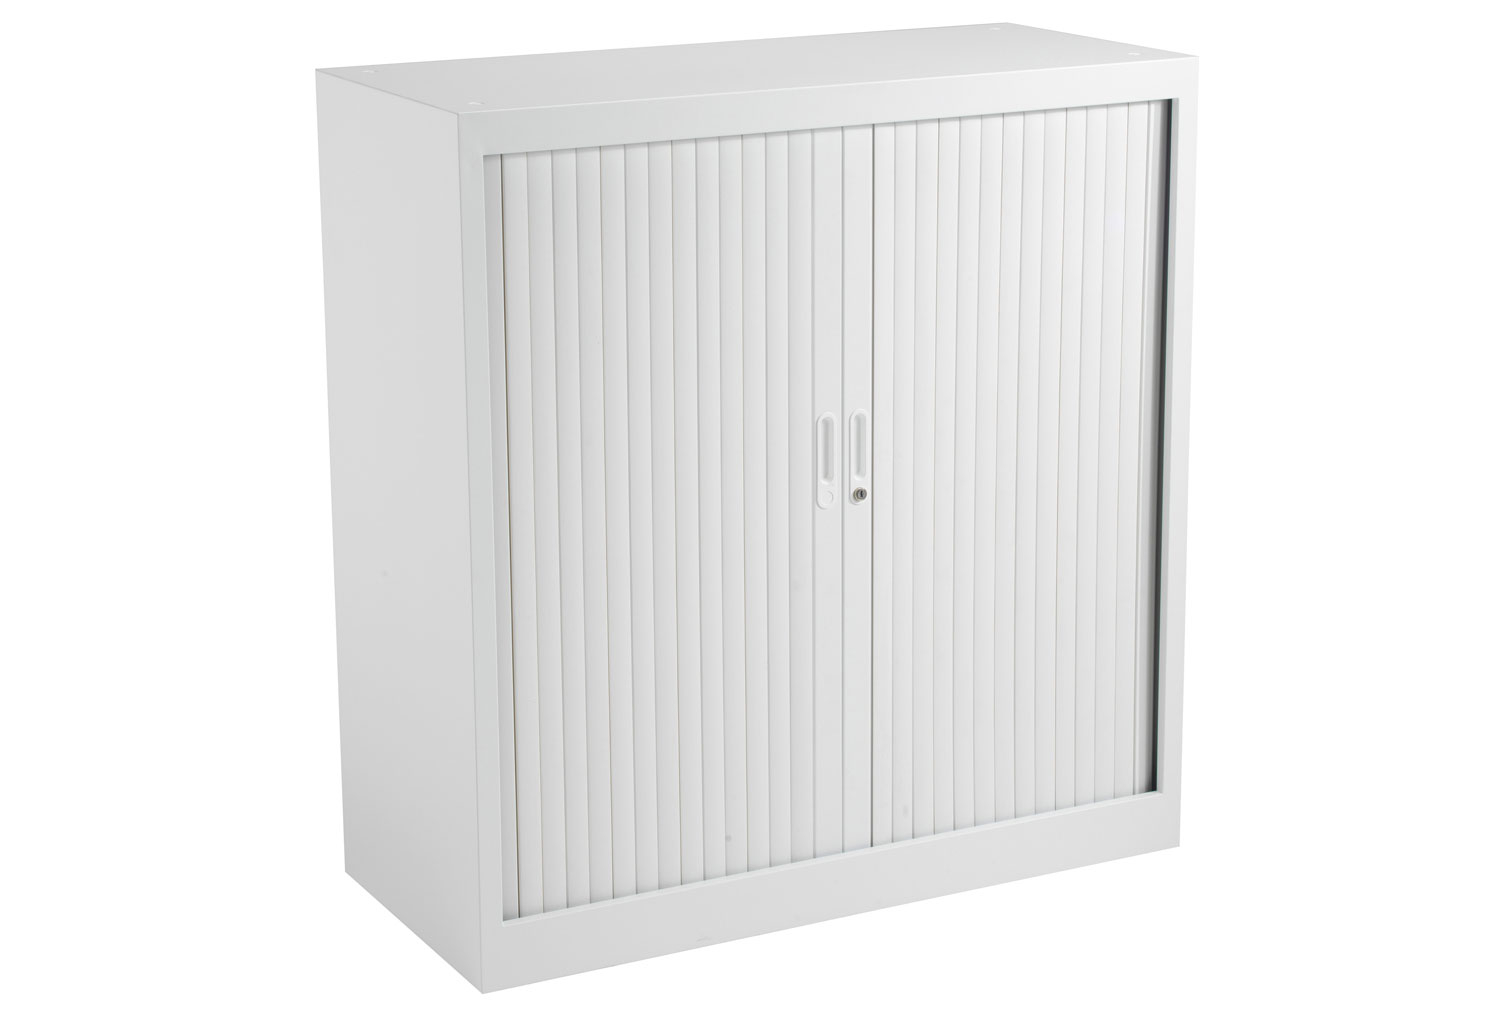 Value Line Metal Tambour Door Office Cupboards, 2 Shelf - 100wx45dx105h (cm), White, Fully Installed